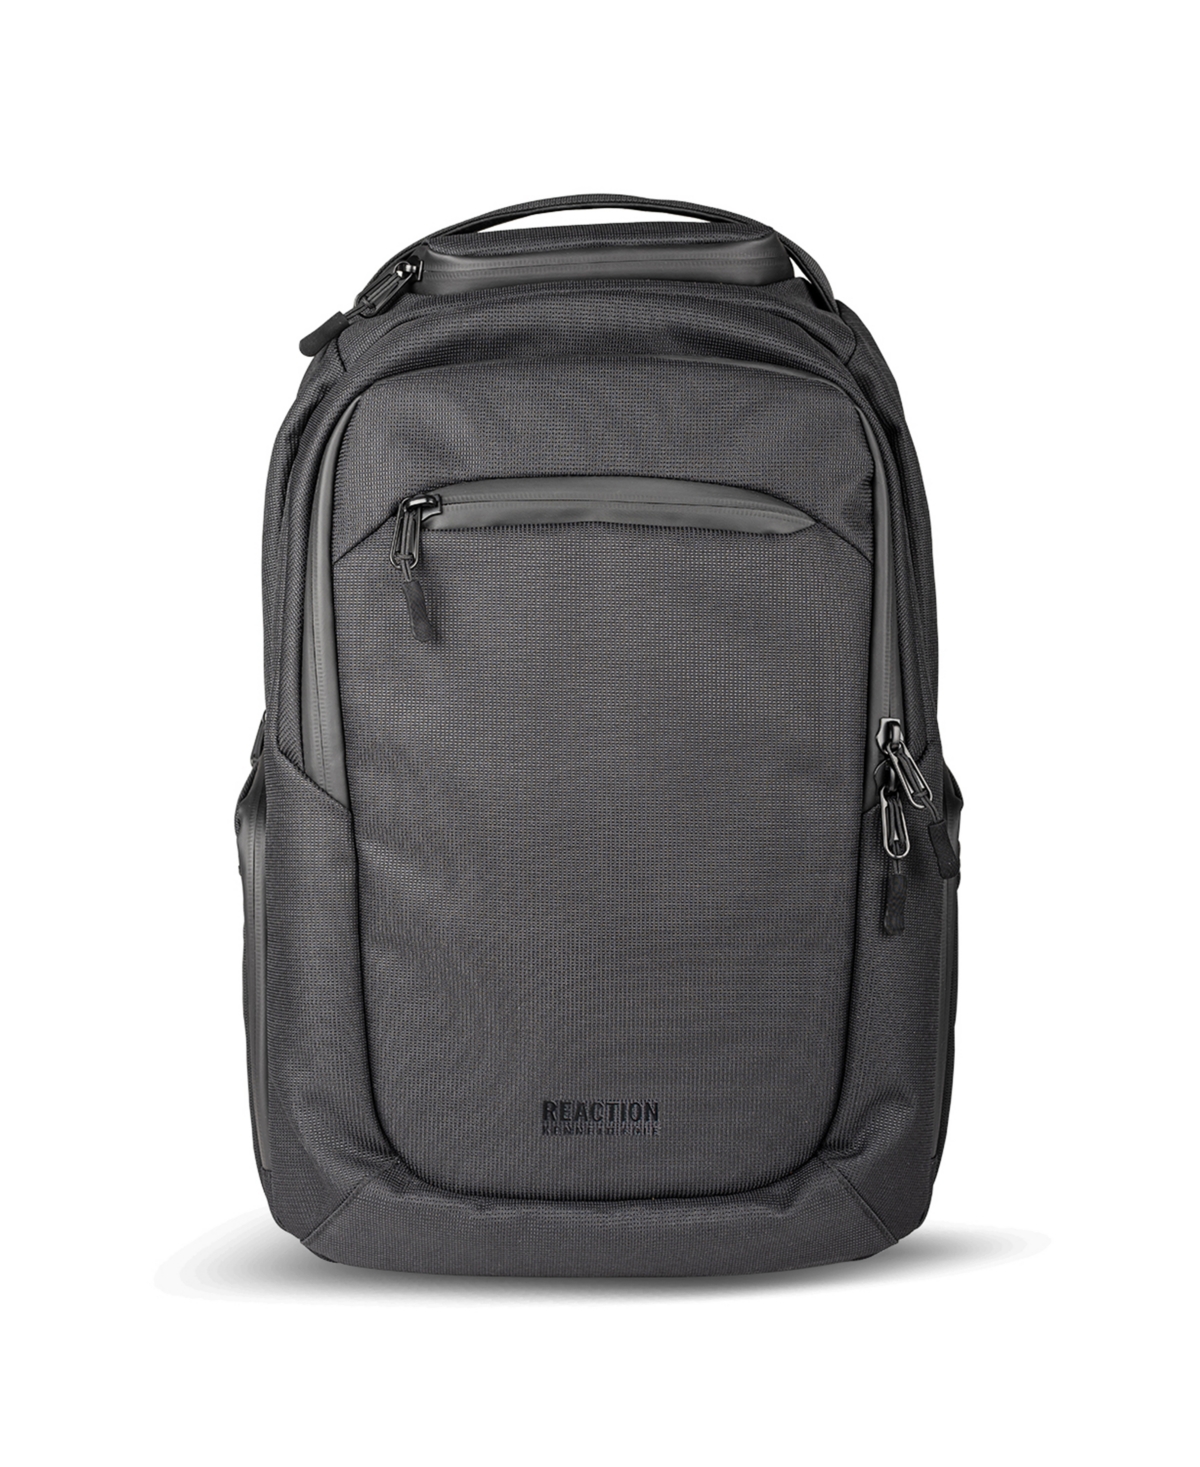 Parker 17" Laptop Backpack with Removable Laptop Sleeve - Black